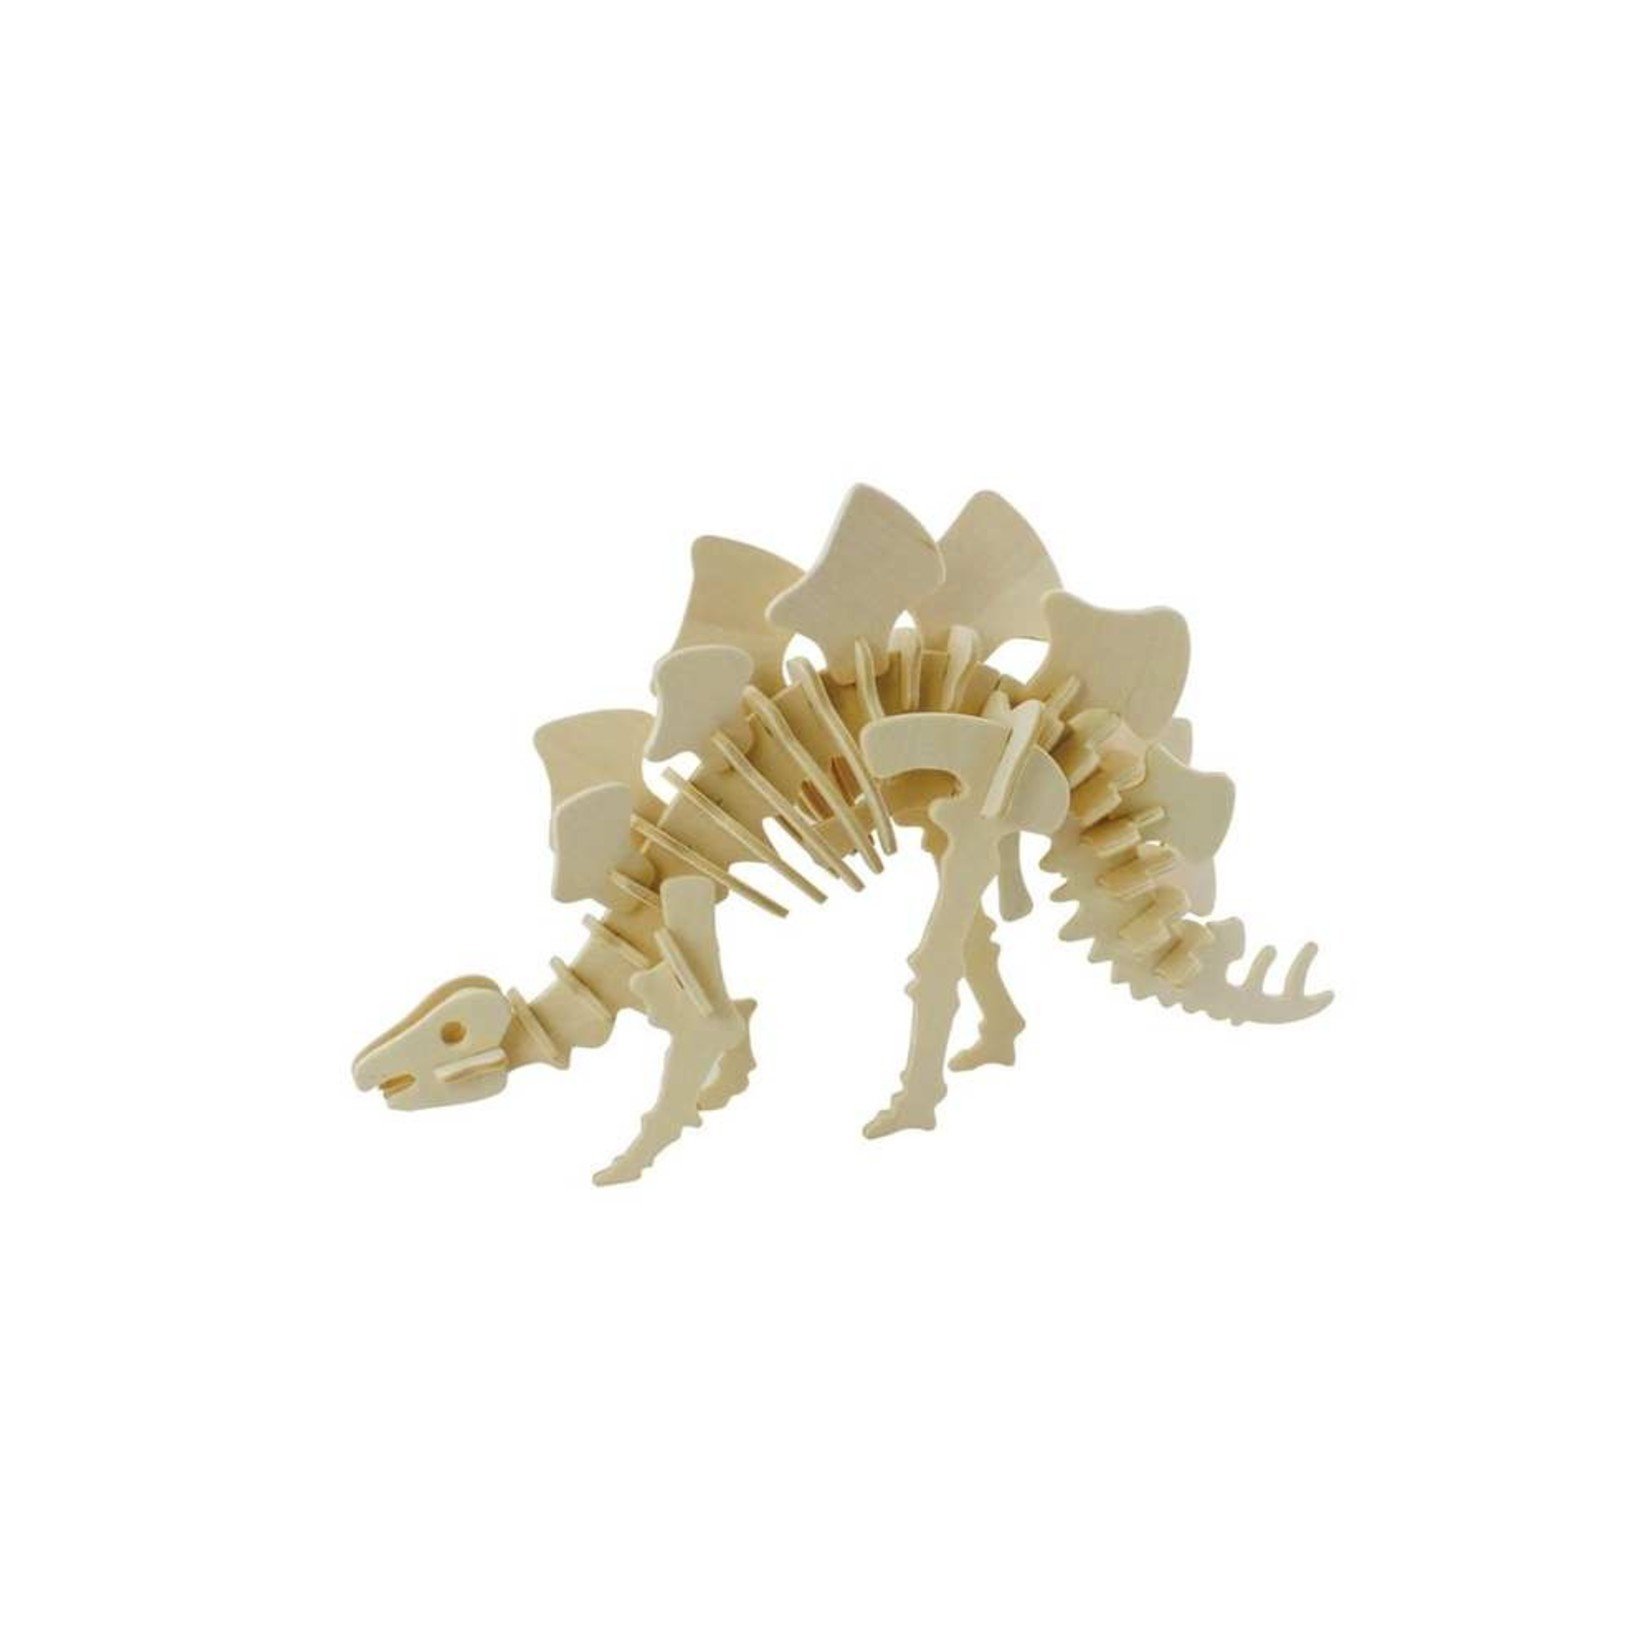 Wooden Puzzle - Stegosaurus